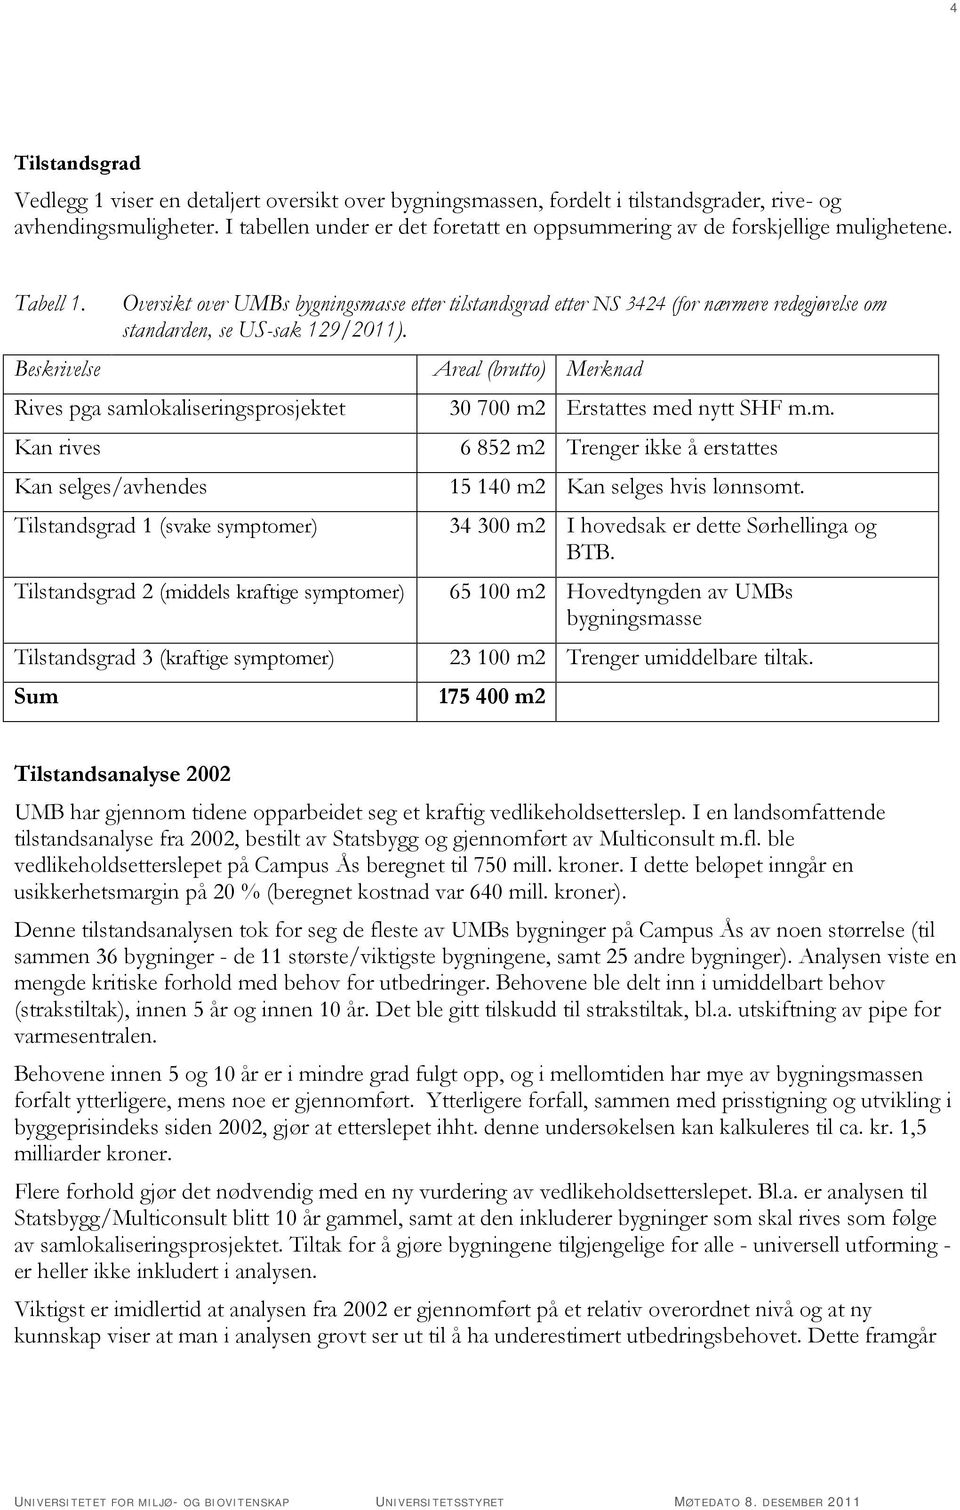 Beskrivelse Oversikt over UMBs bygningsmasse etter tilstandsgrad etter NS 3424 (for nærmere redegjørelse om standarden, se US-sak 129/2011).